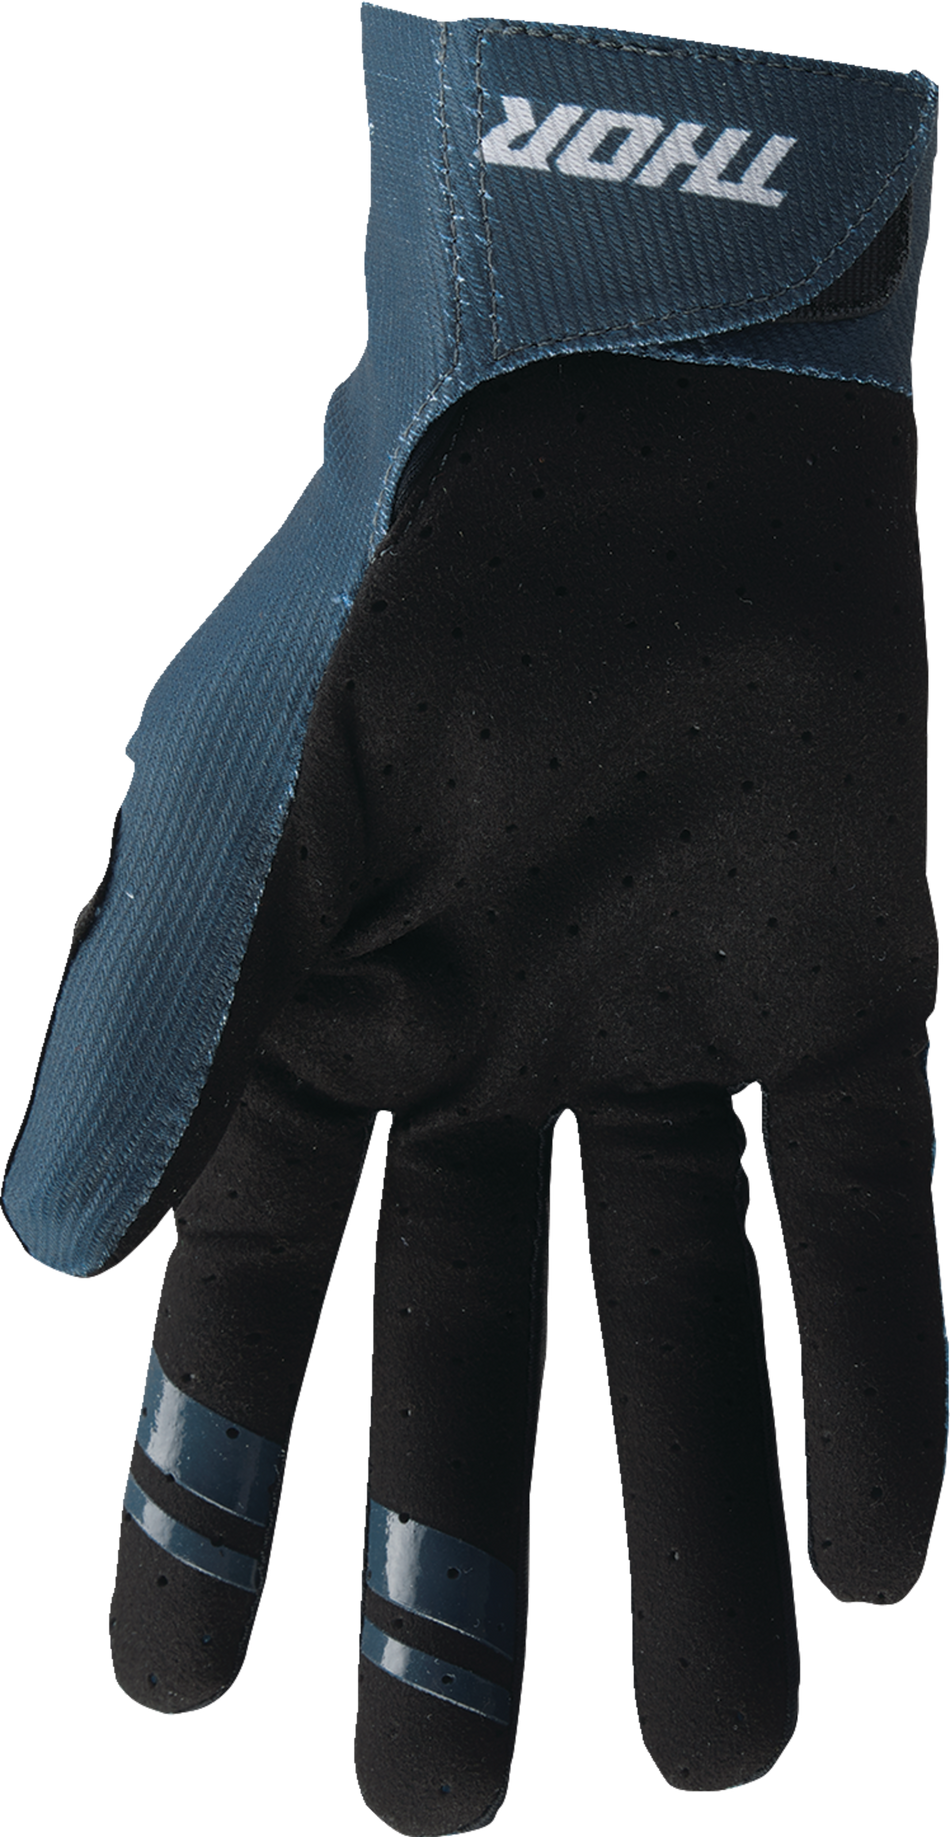 THOR Intense Assist Censis Gloves - Teal/Midnight - XL 3360-0239